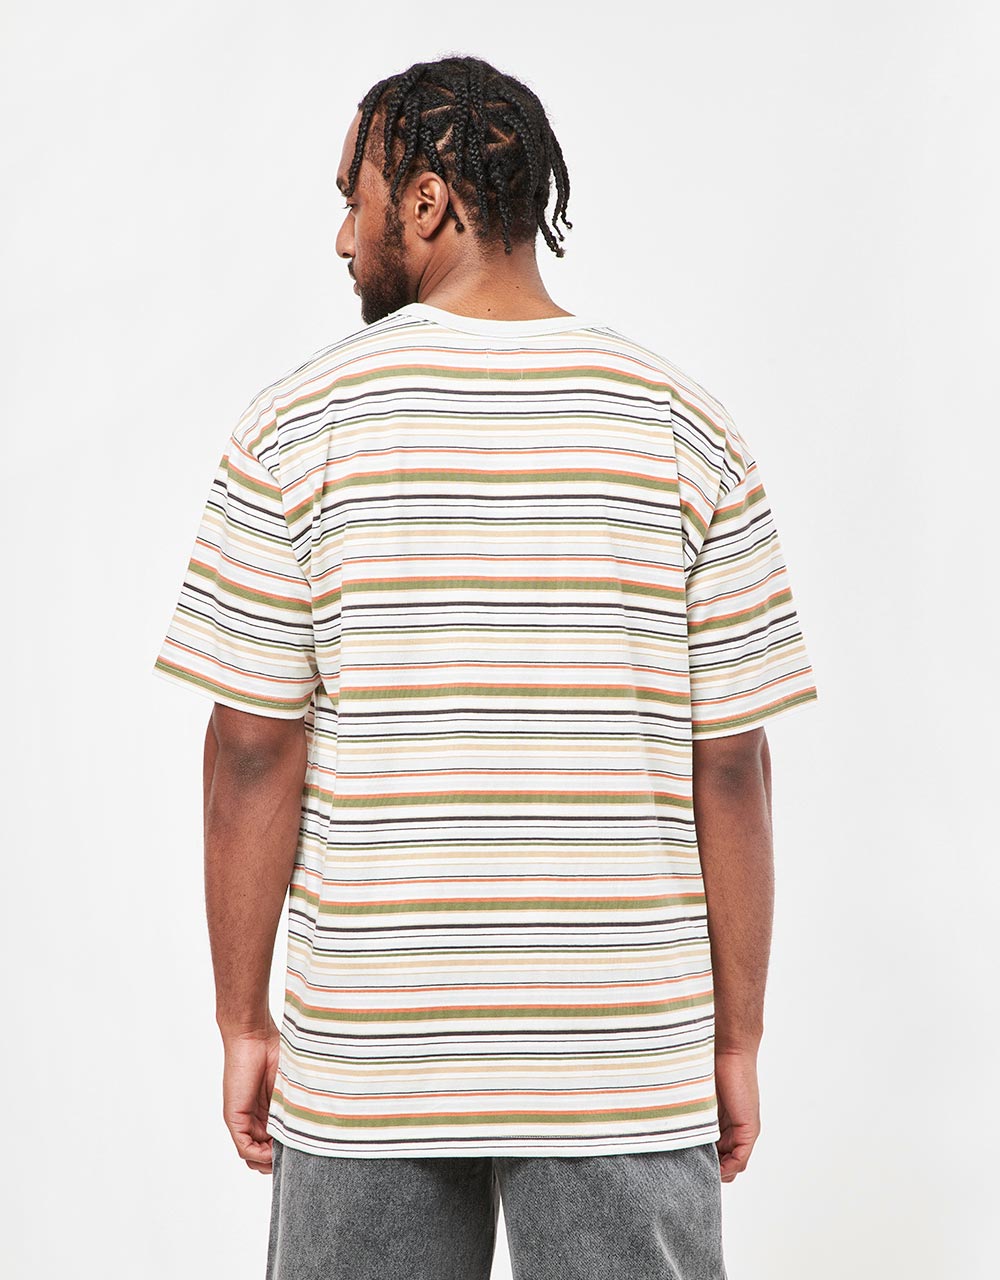 Vans Cullen Striped Pocket T-Shirt - Pale Aqua/Marshmallow